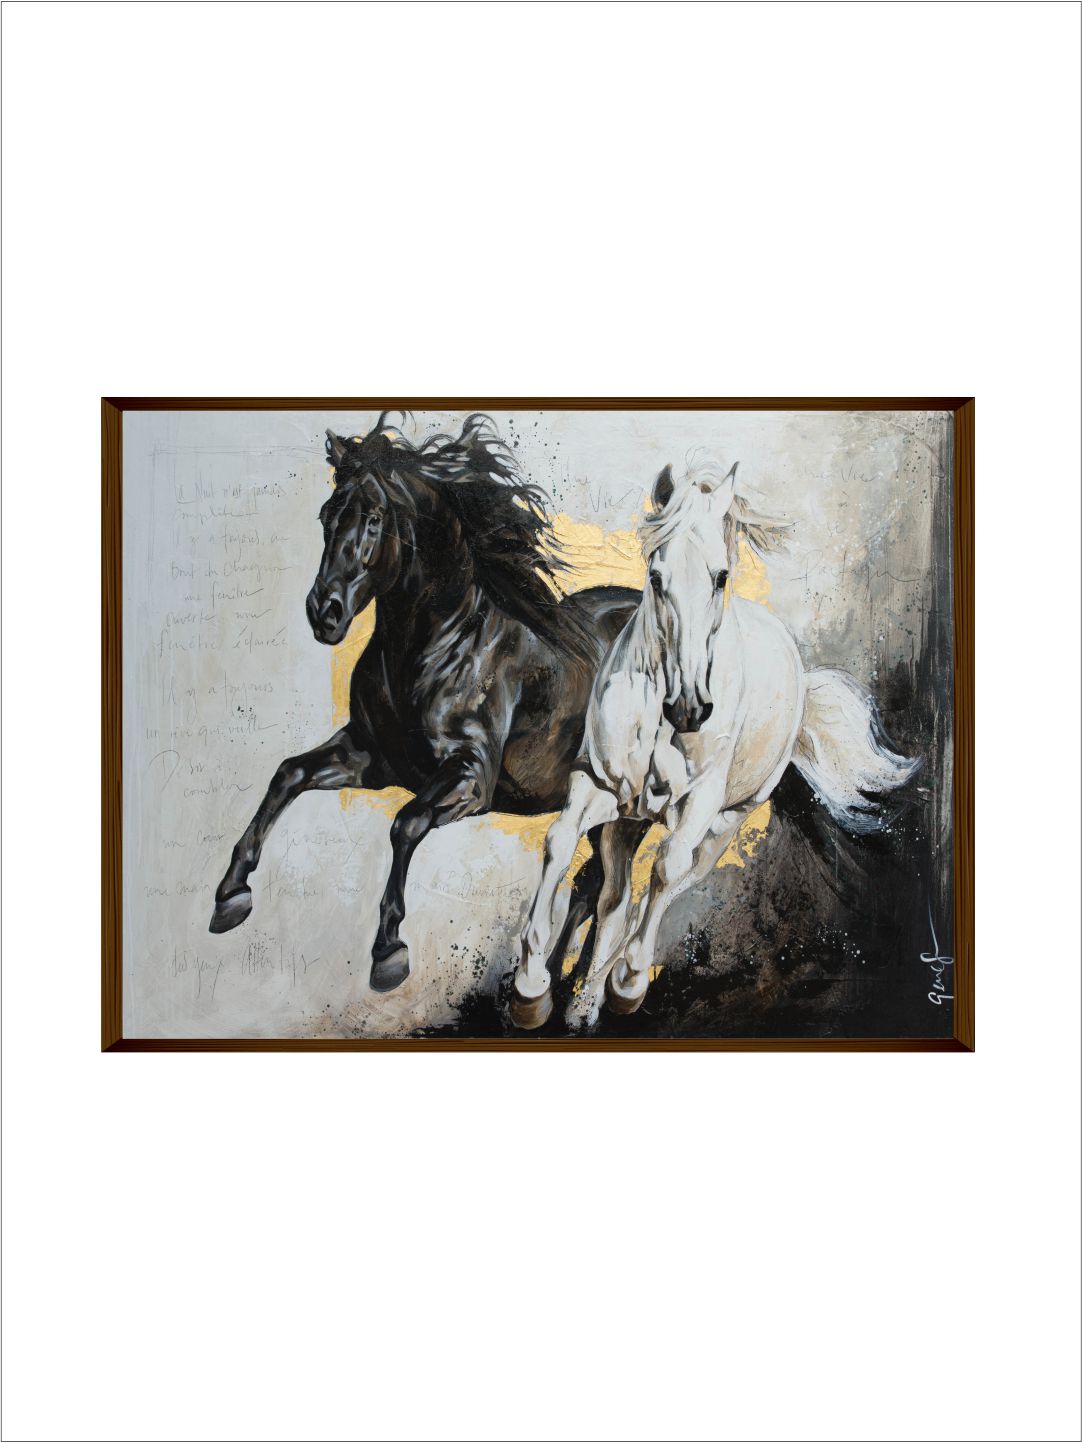 Black and White Horse Art - Wall Decor - 2